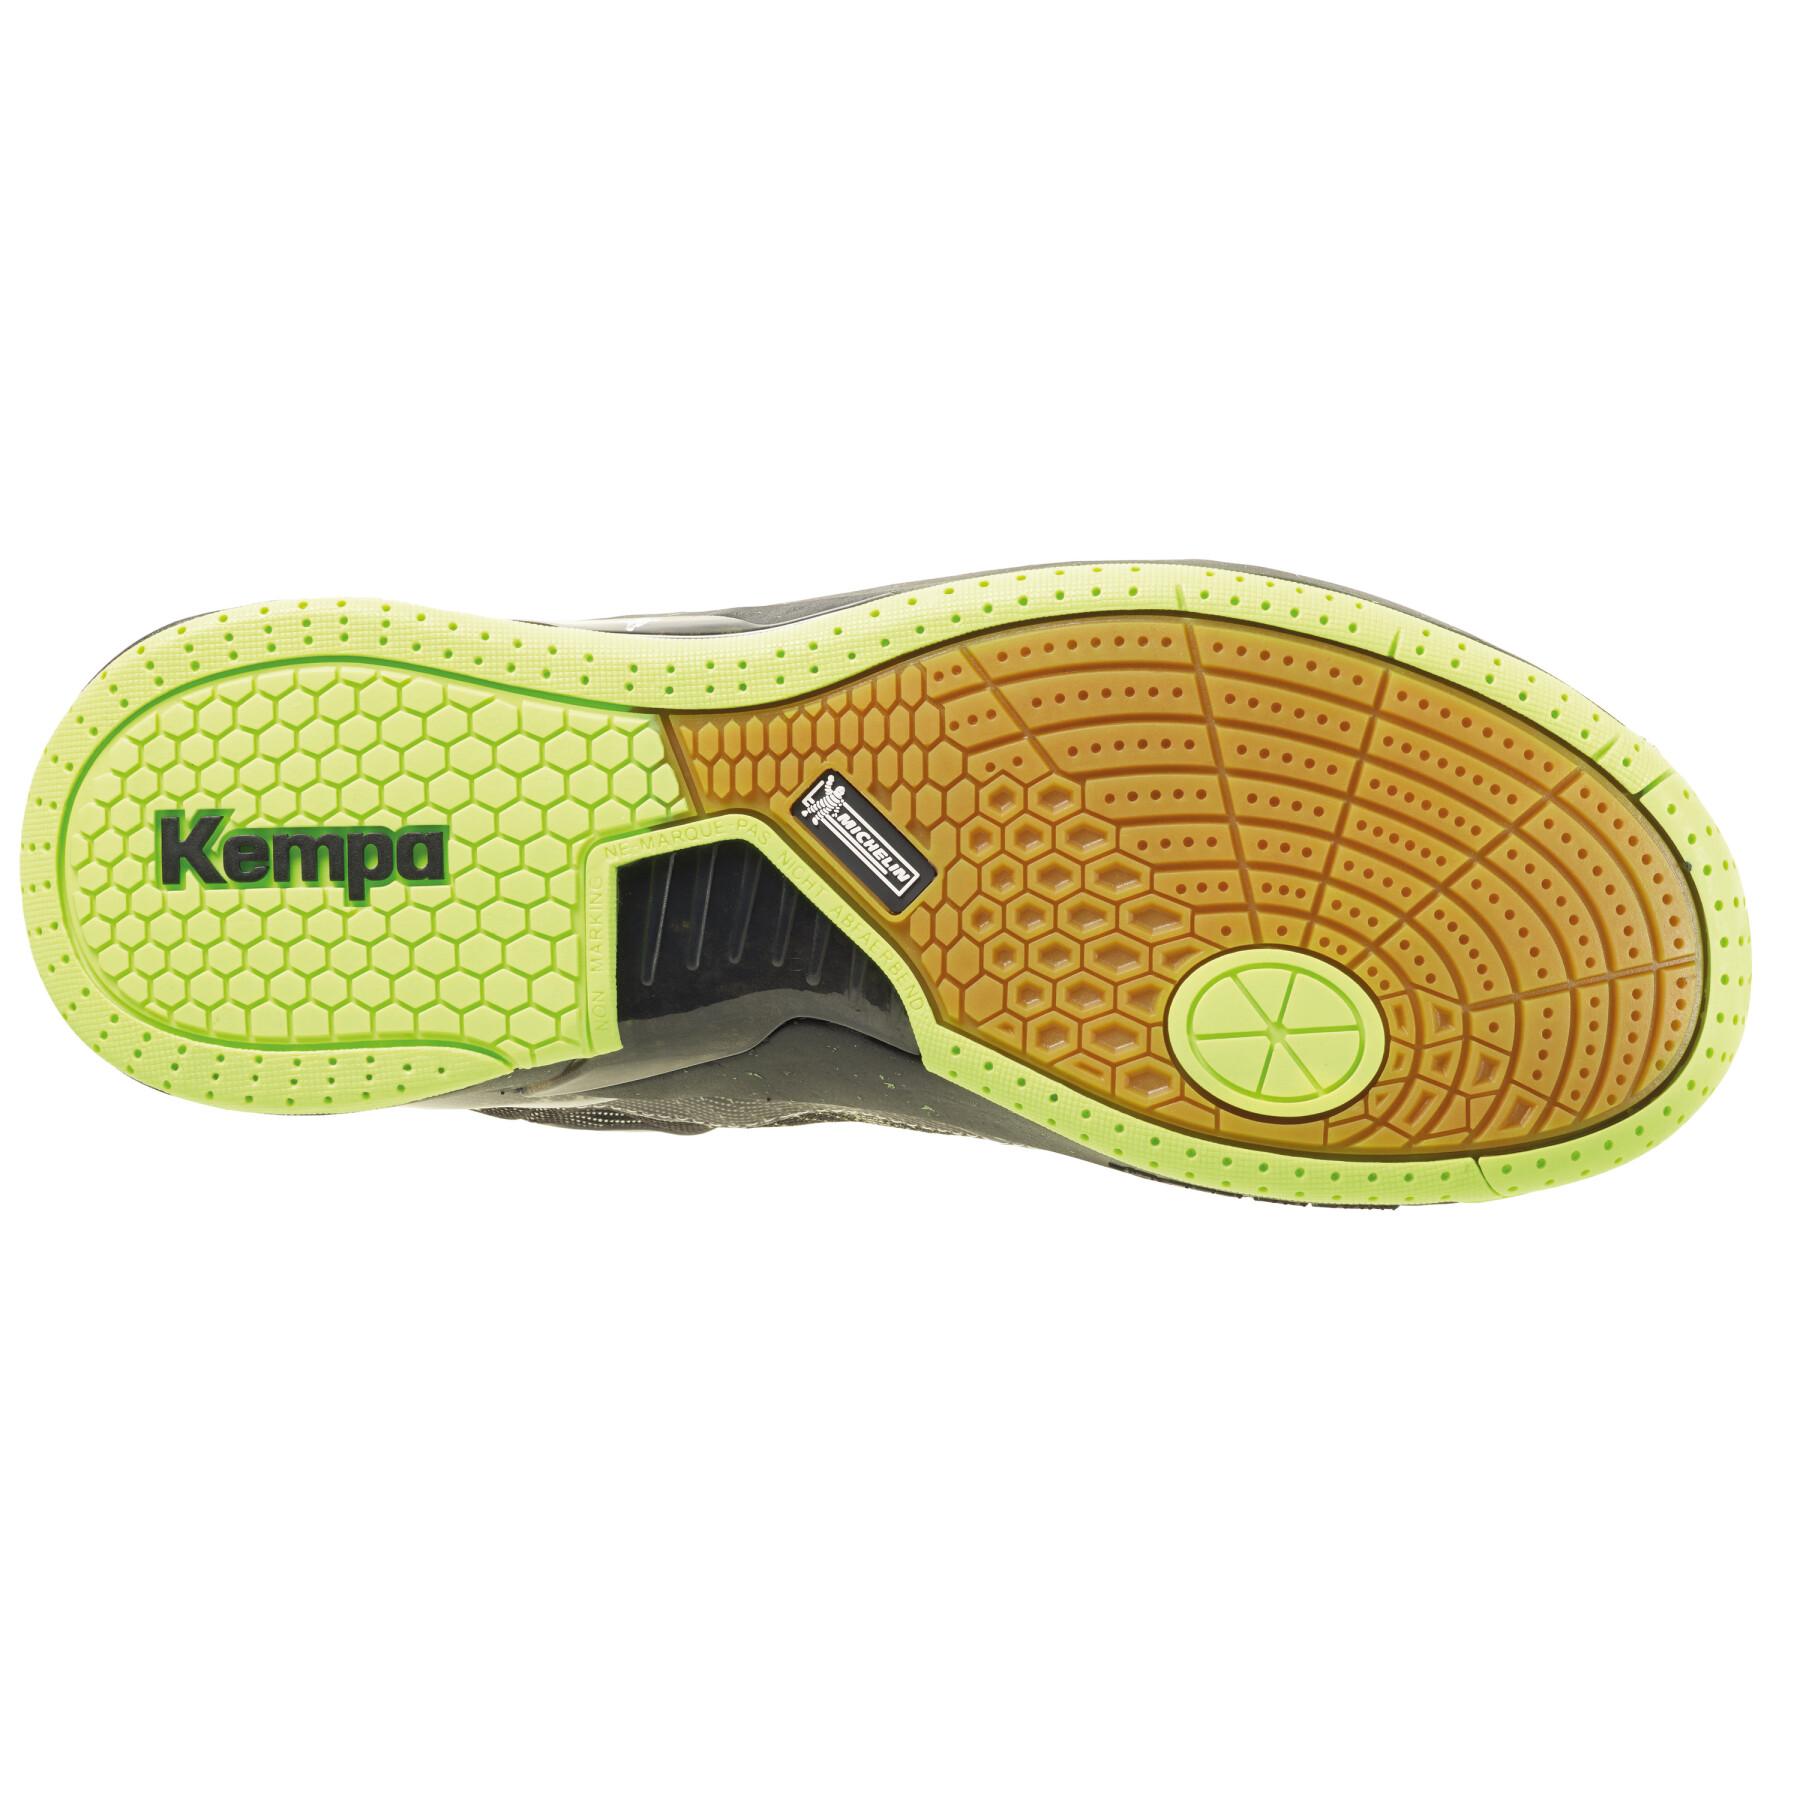 Schuhe Kempa Attack Pro Contender Caution